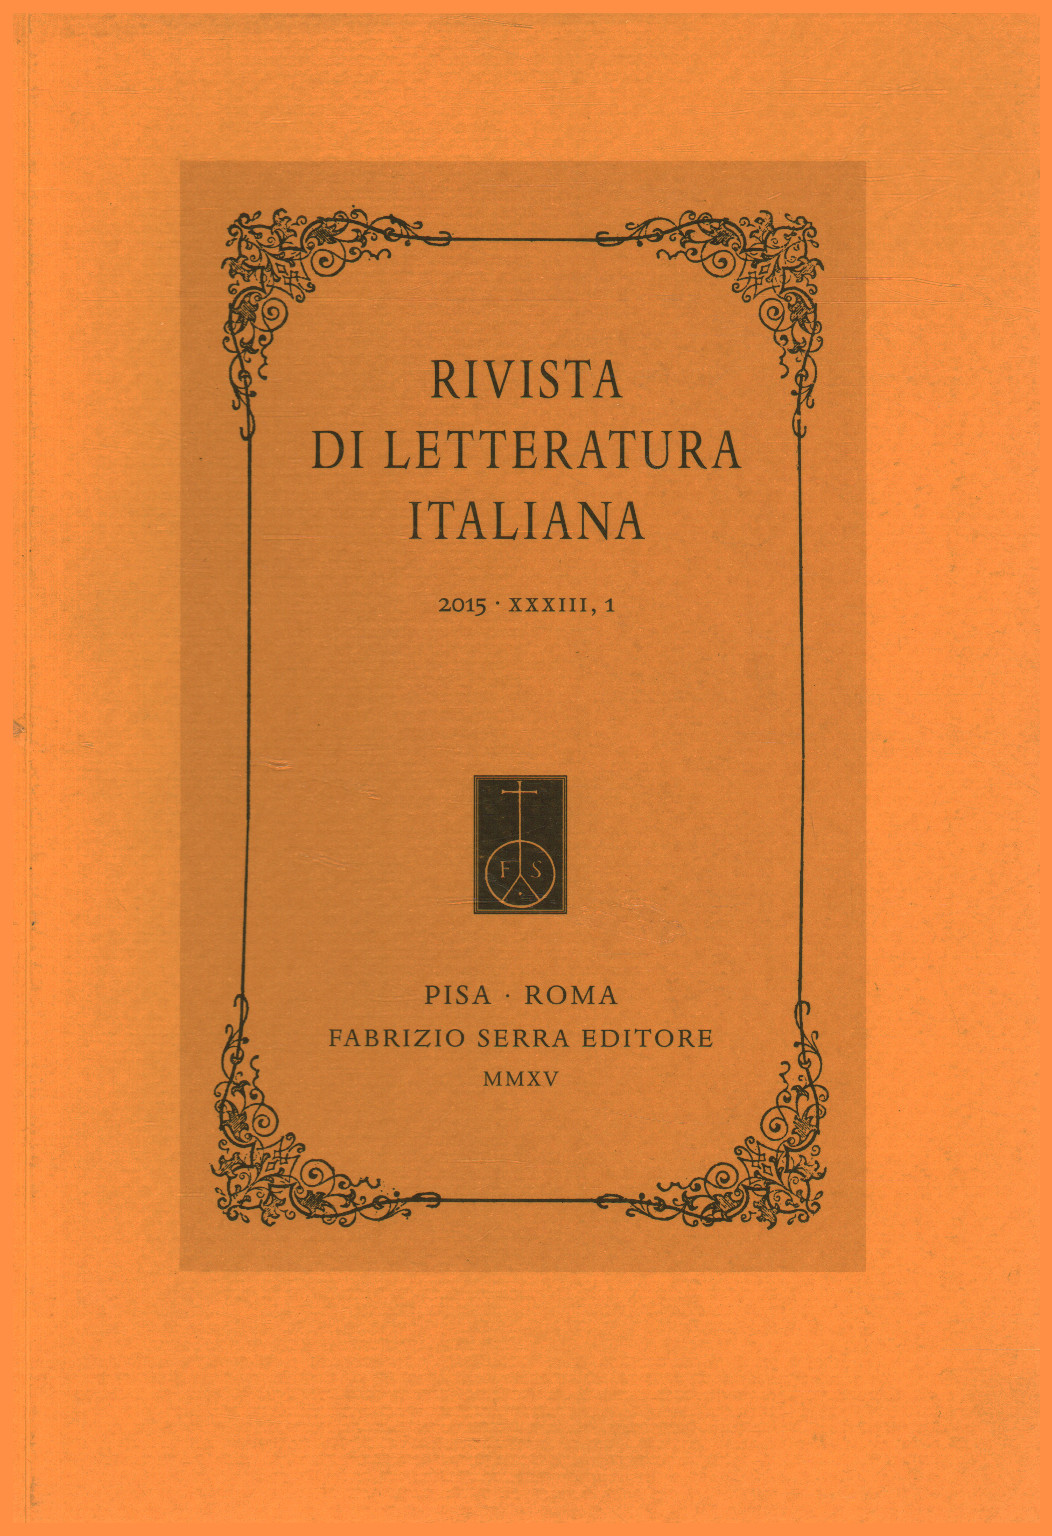 Journal of Italian literature 2015,XXXIII,1, s.a.